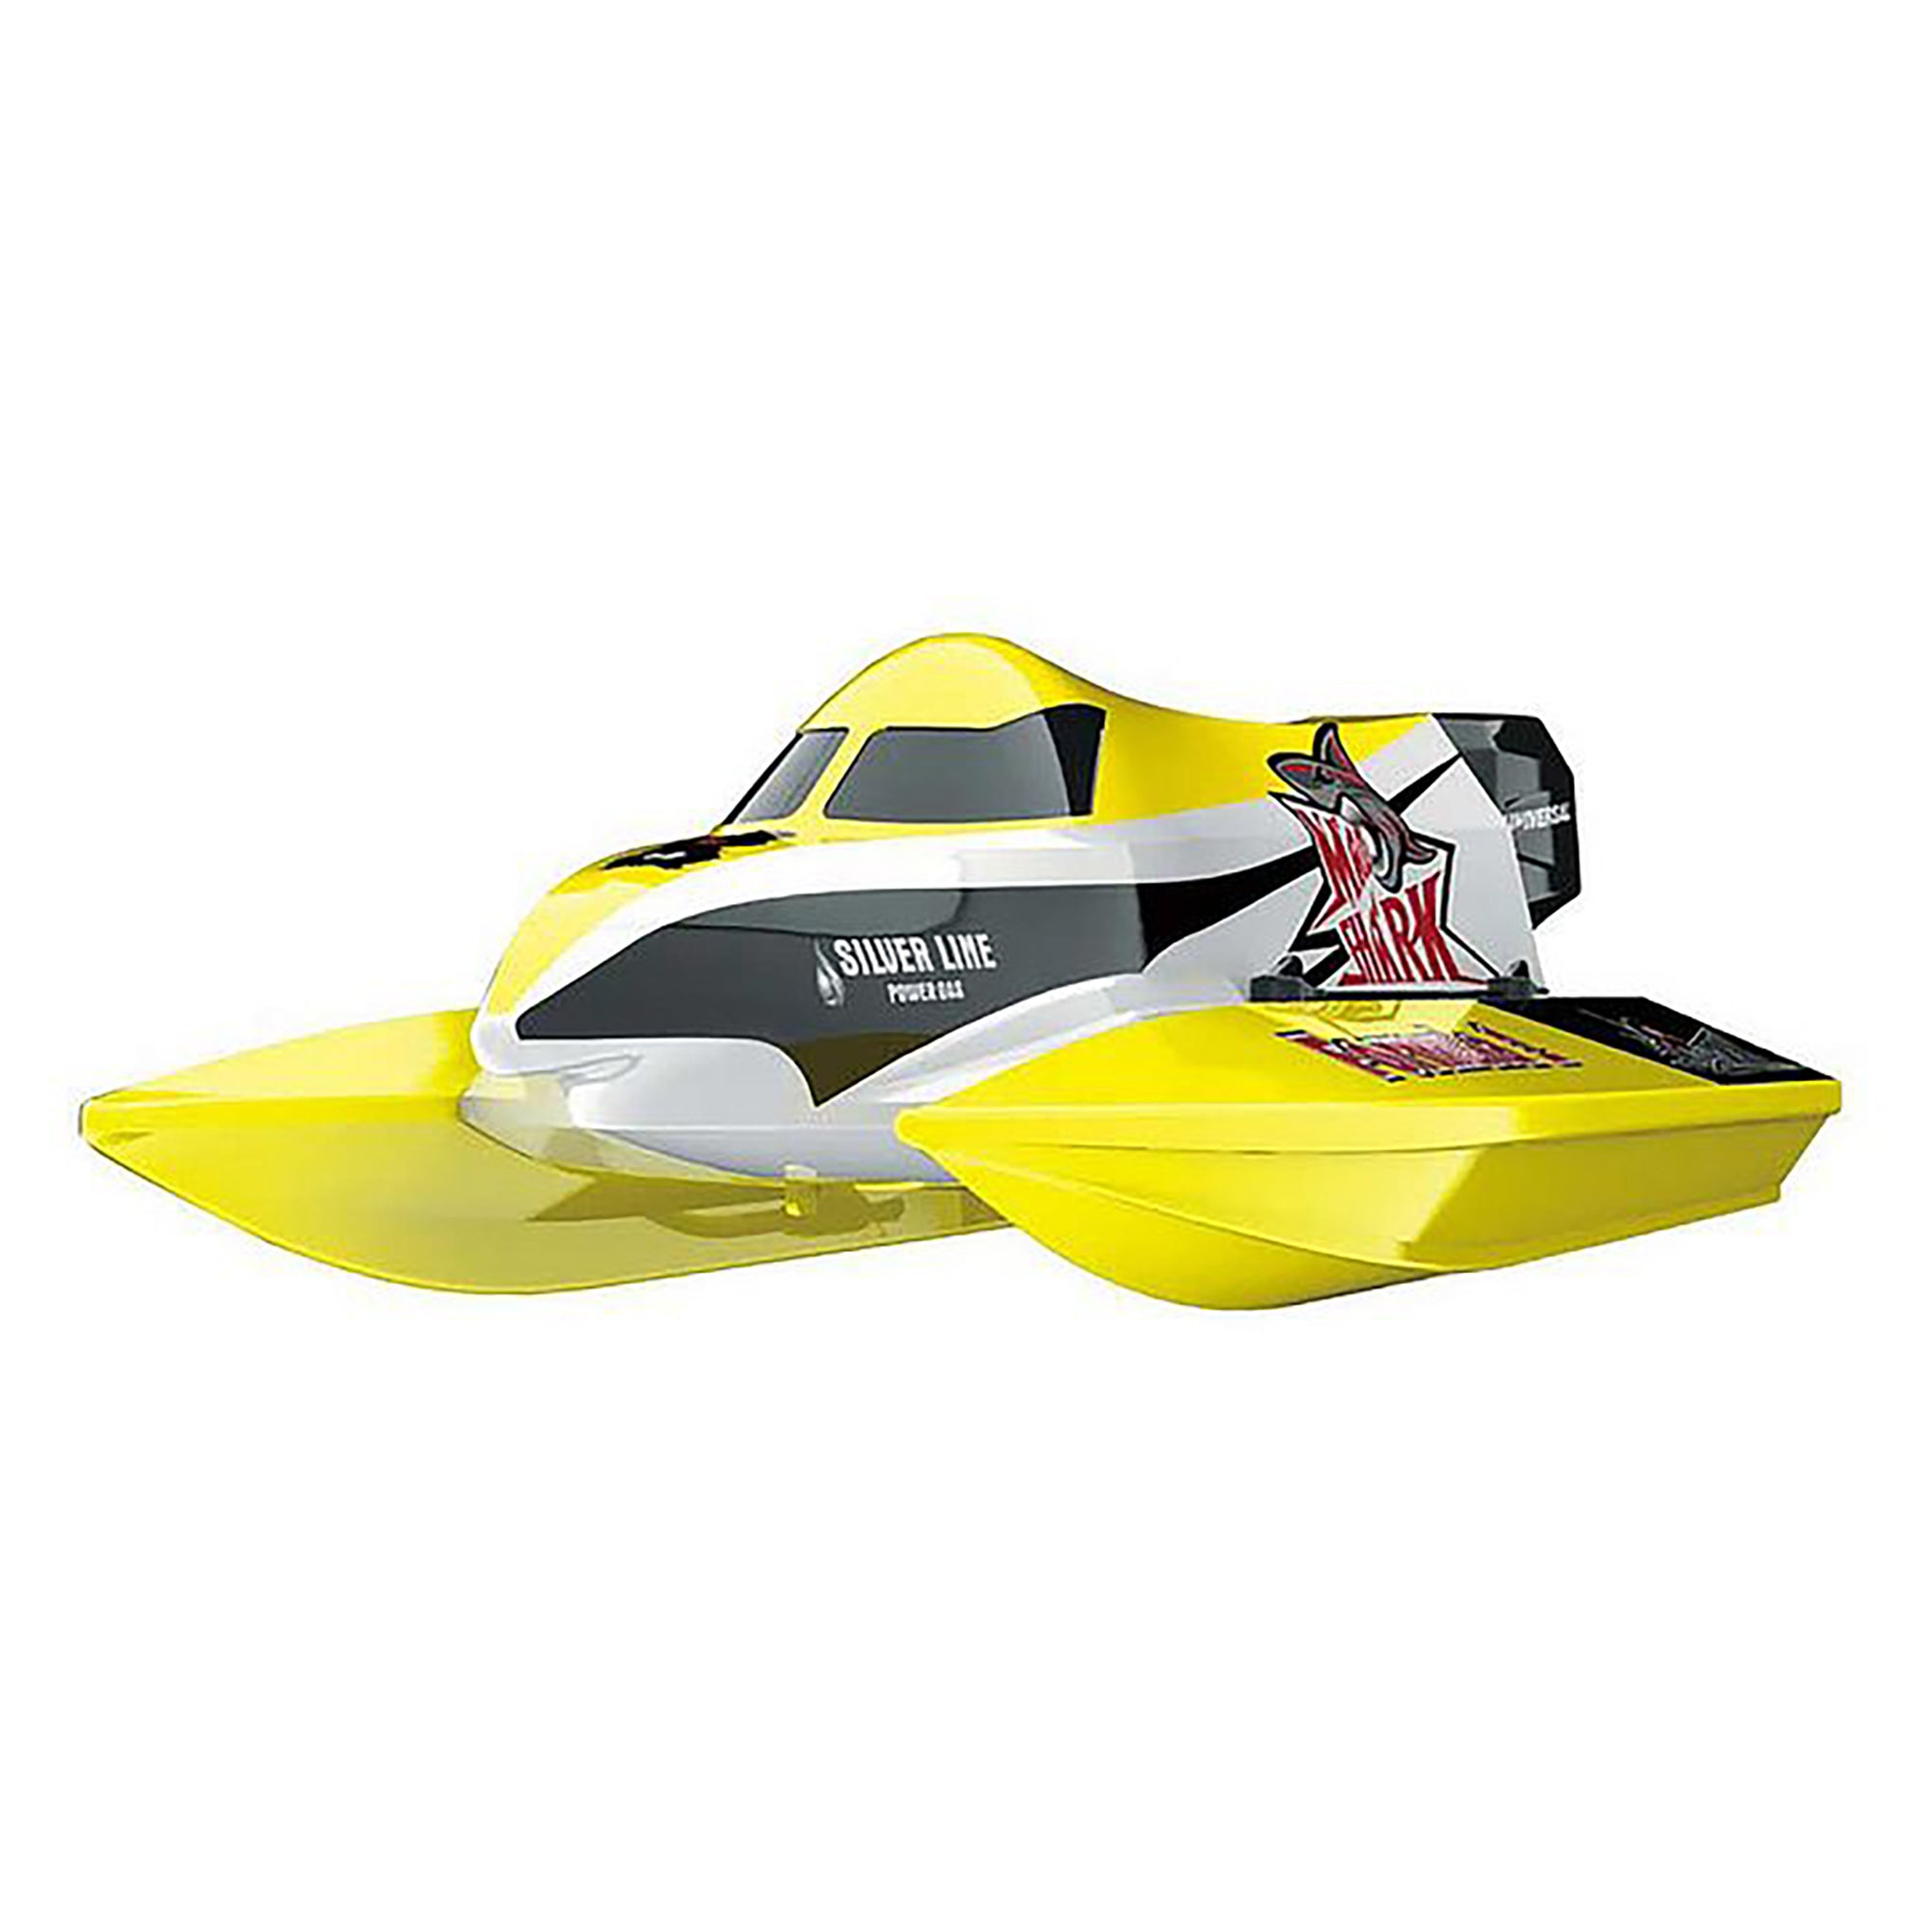 Joysway 8203 Mad Shark V3 2.4GHz RTR Speed Boat